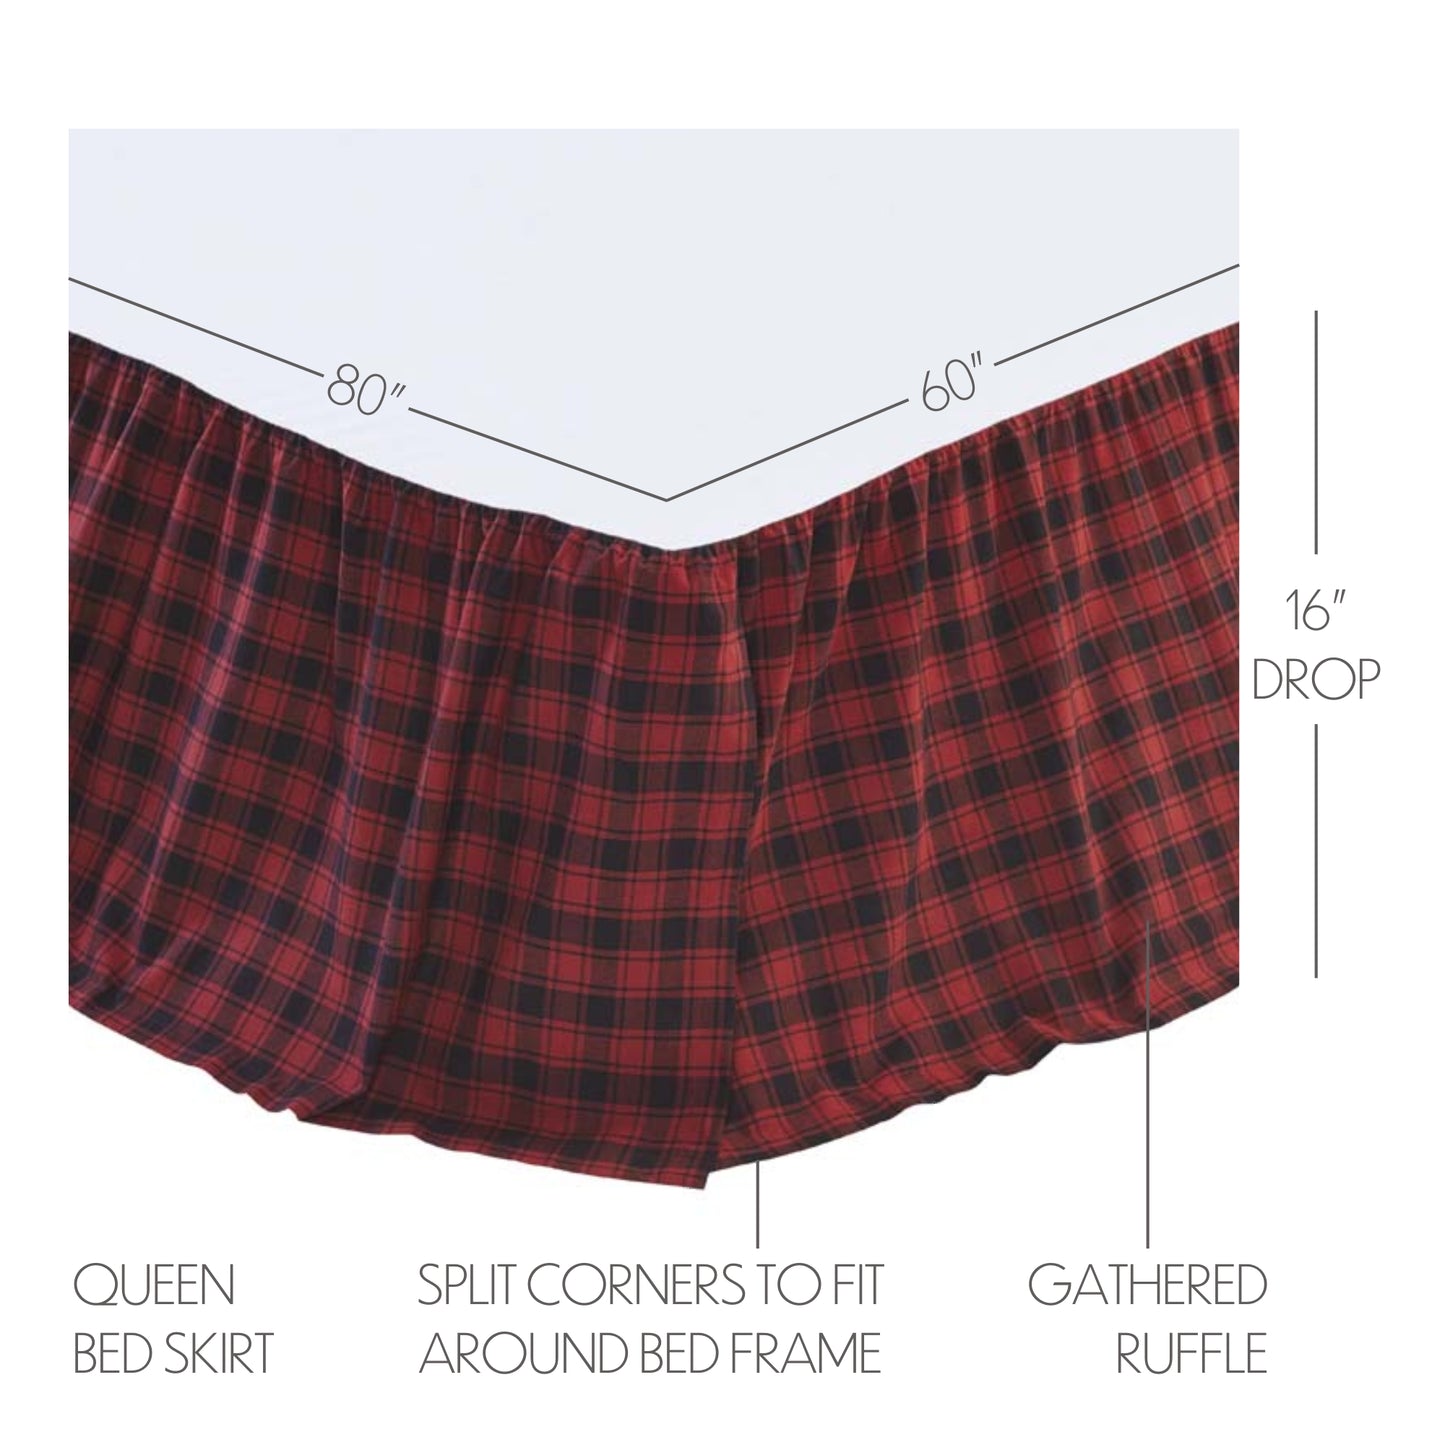 37859-Cumberland-Queen-Bed-Skirt-60x80x16-image-1